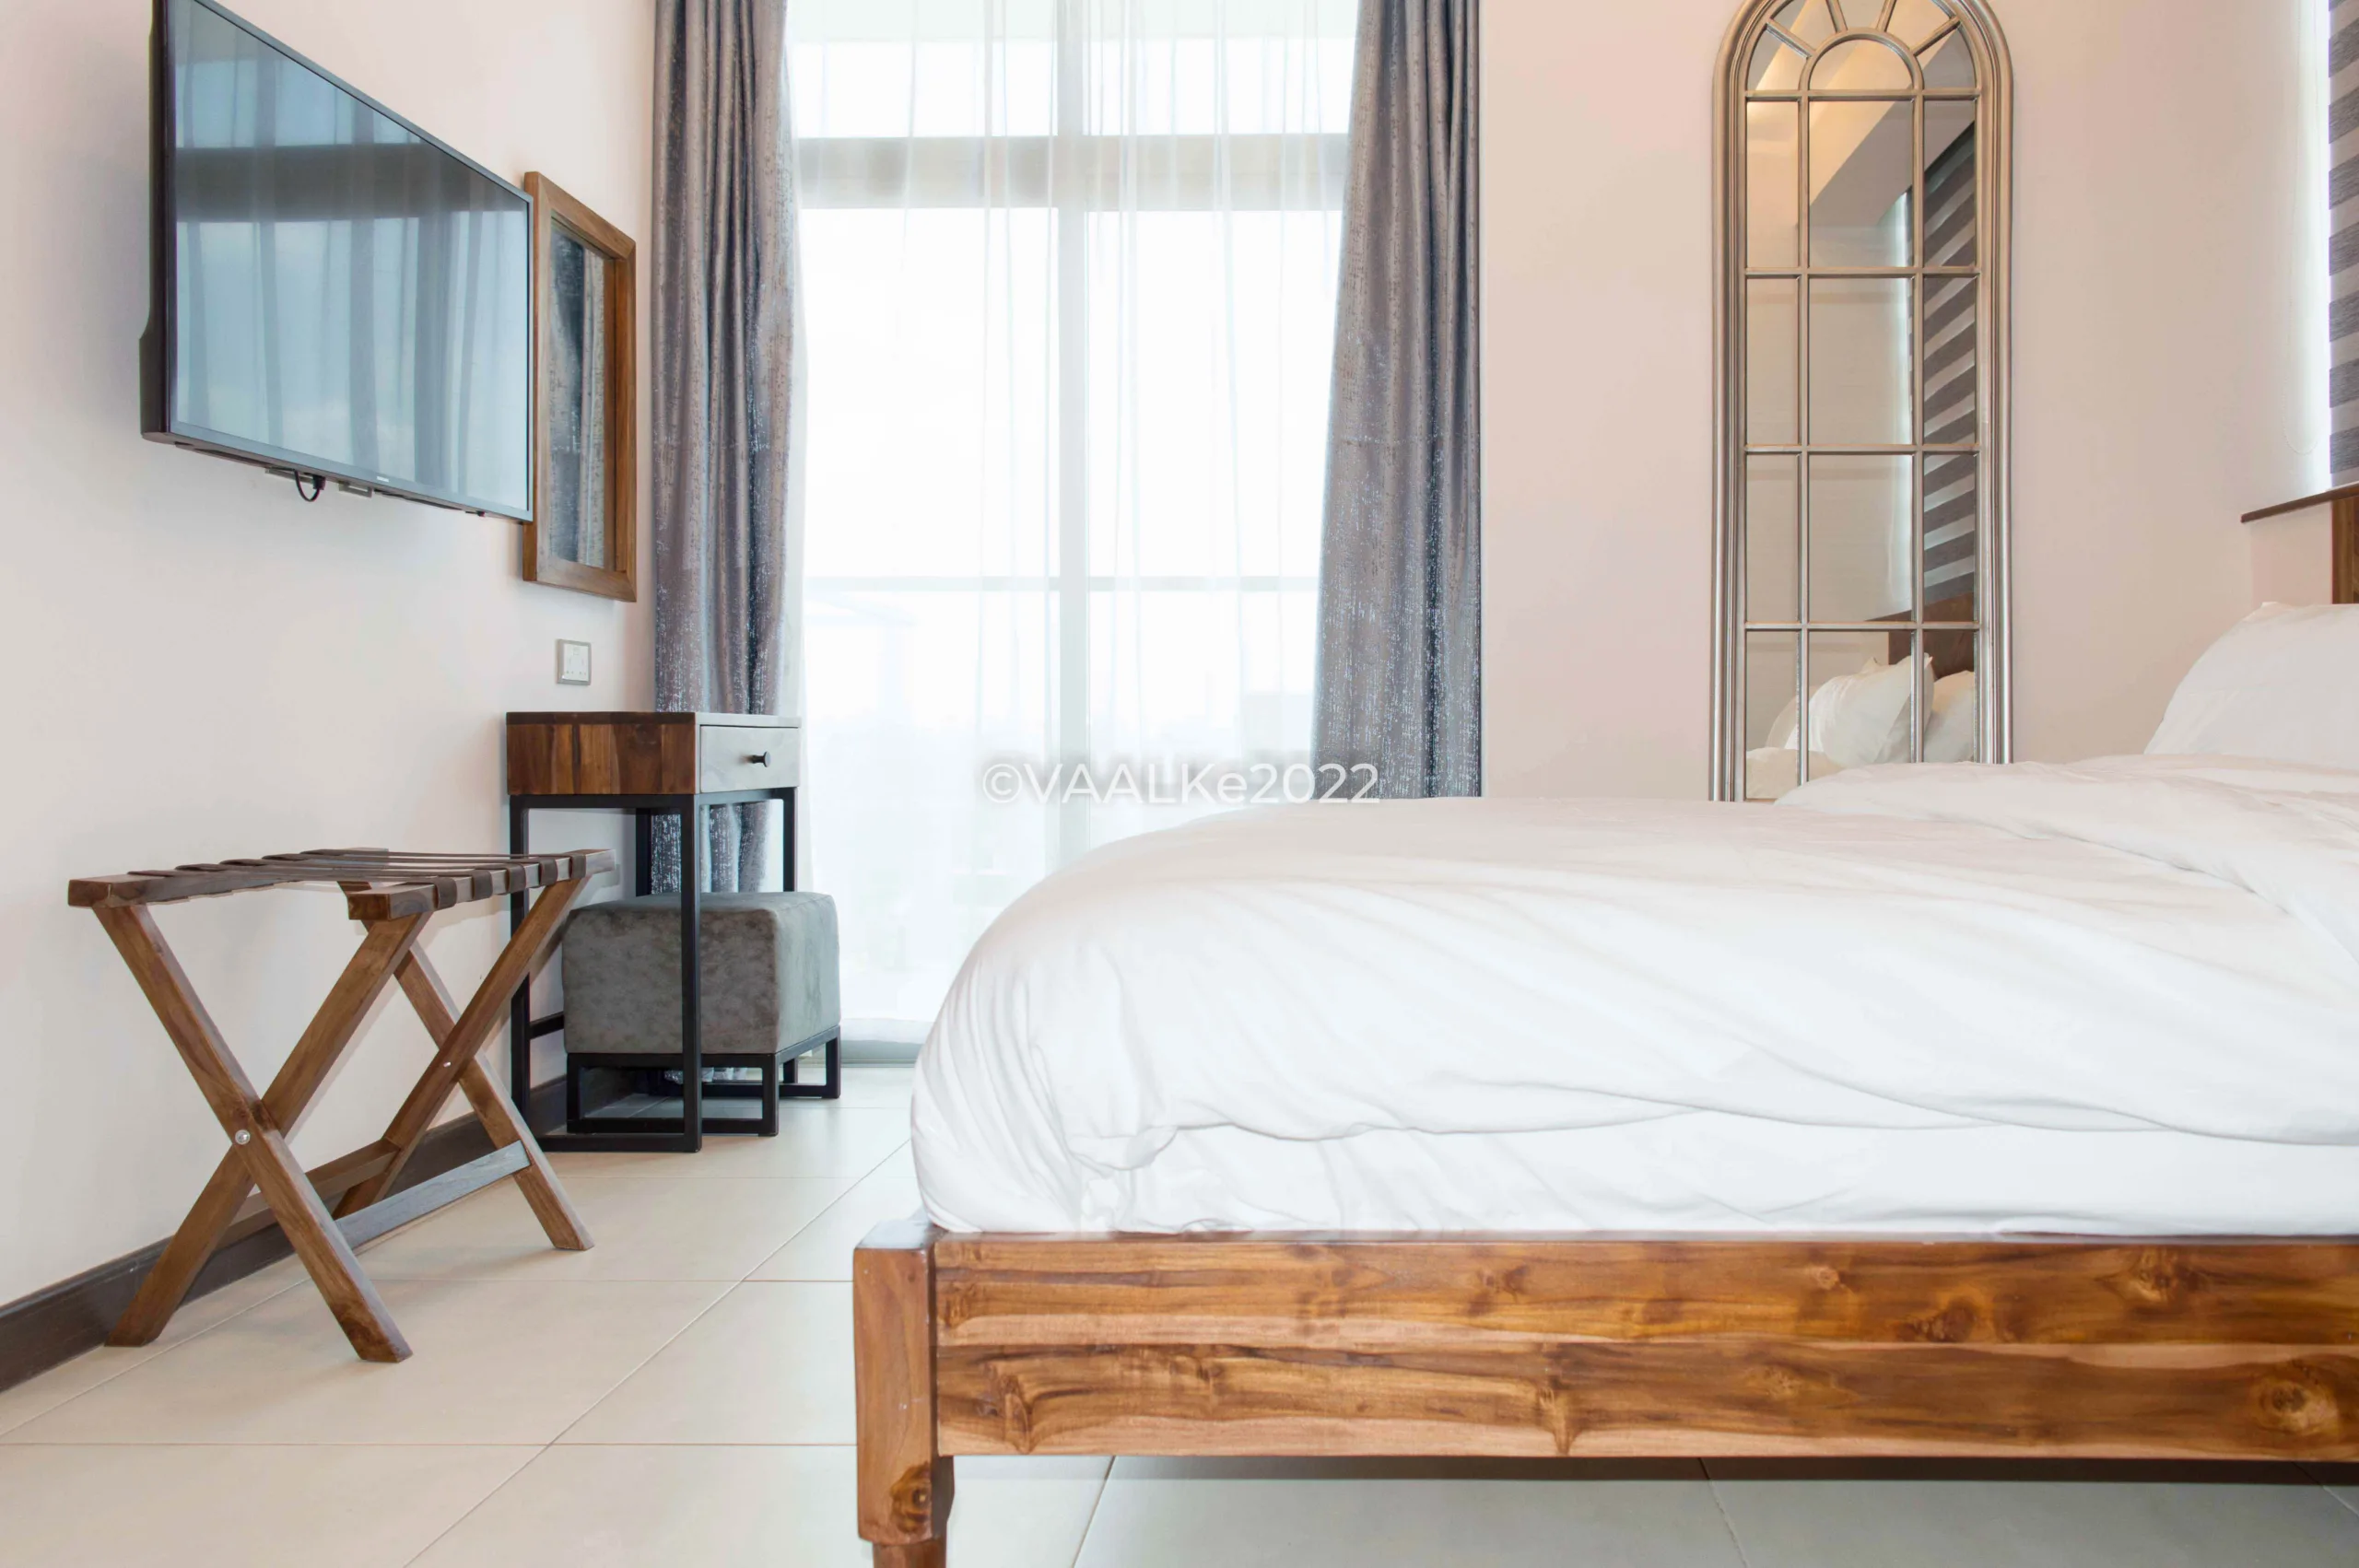 2 bedroom apartments for rent in westlands, nairobi